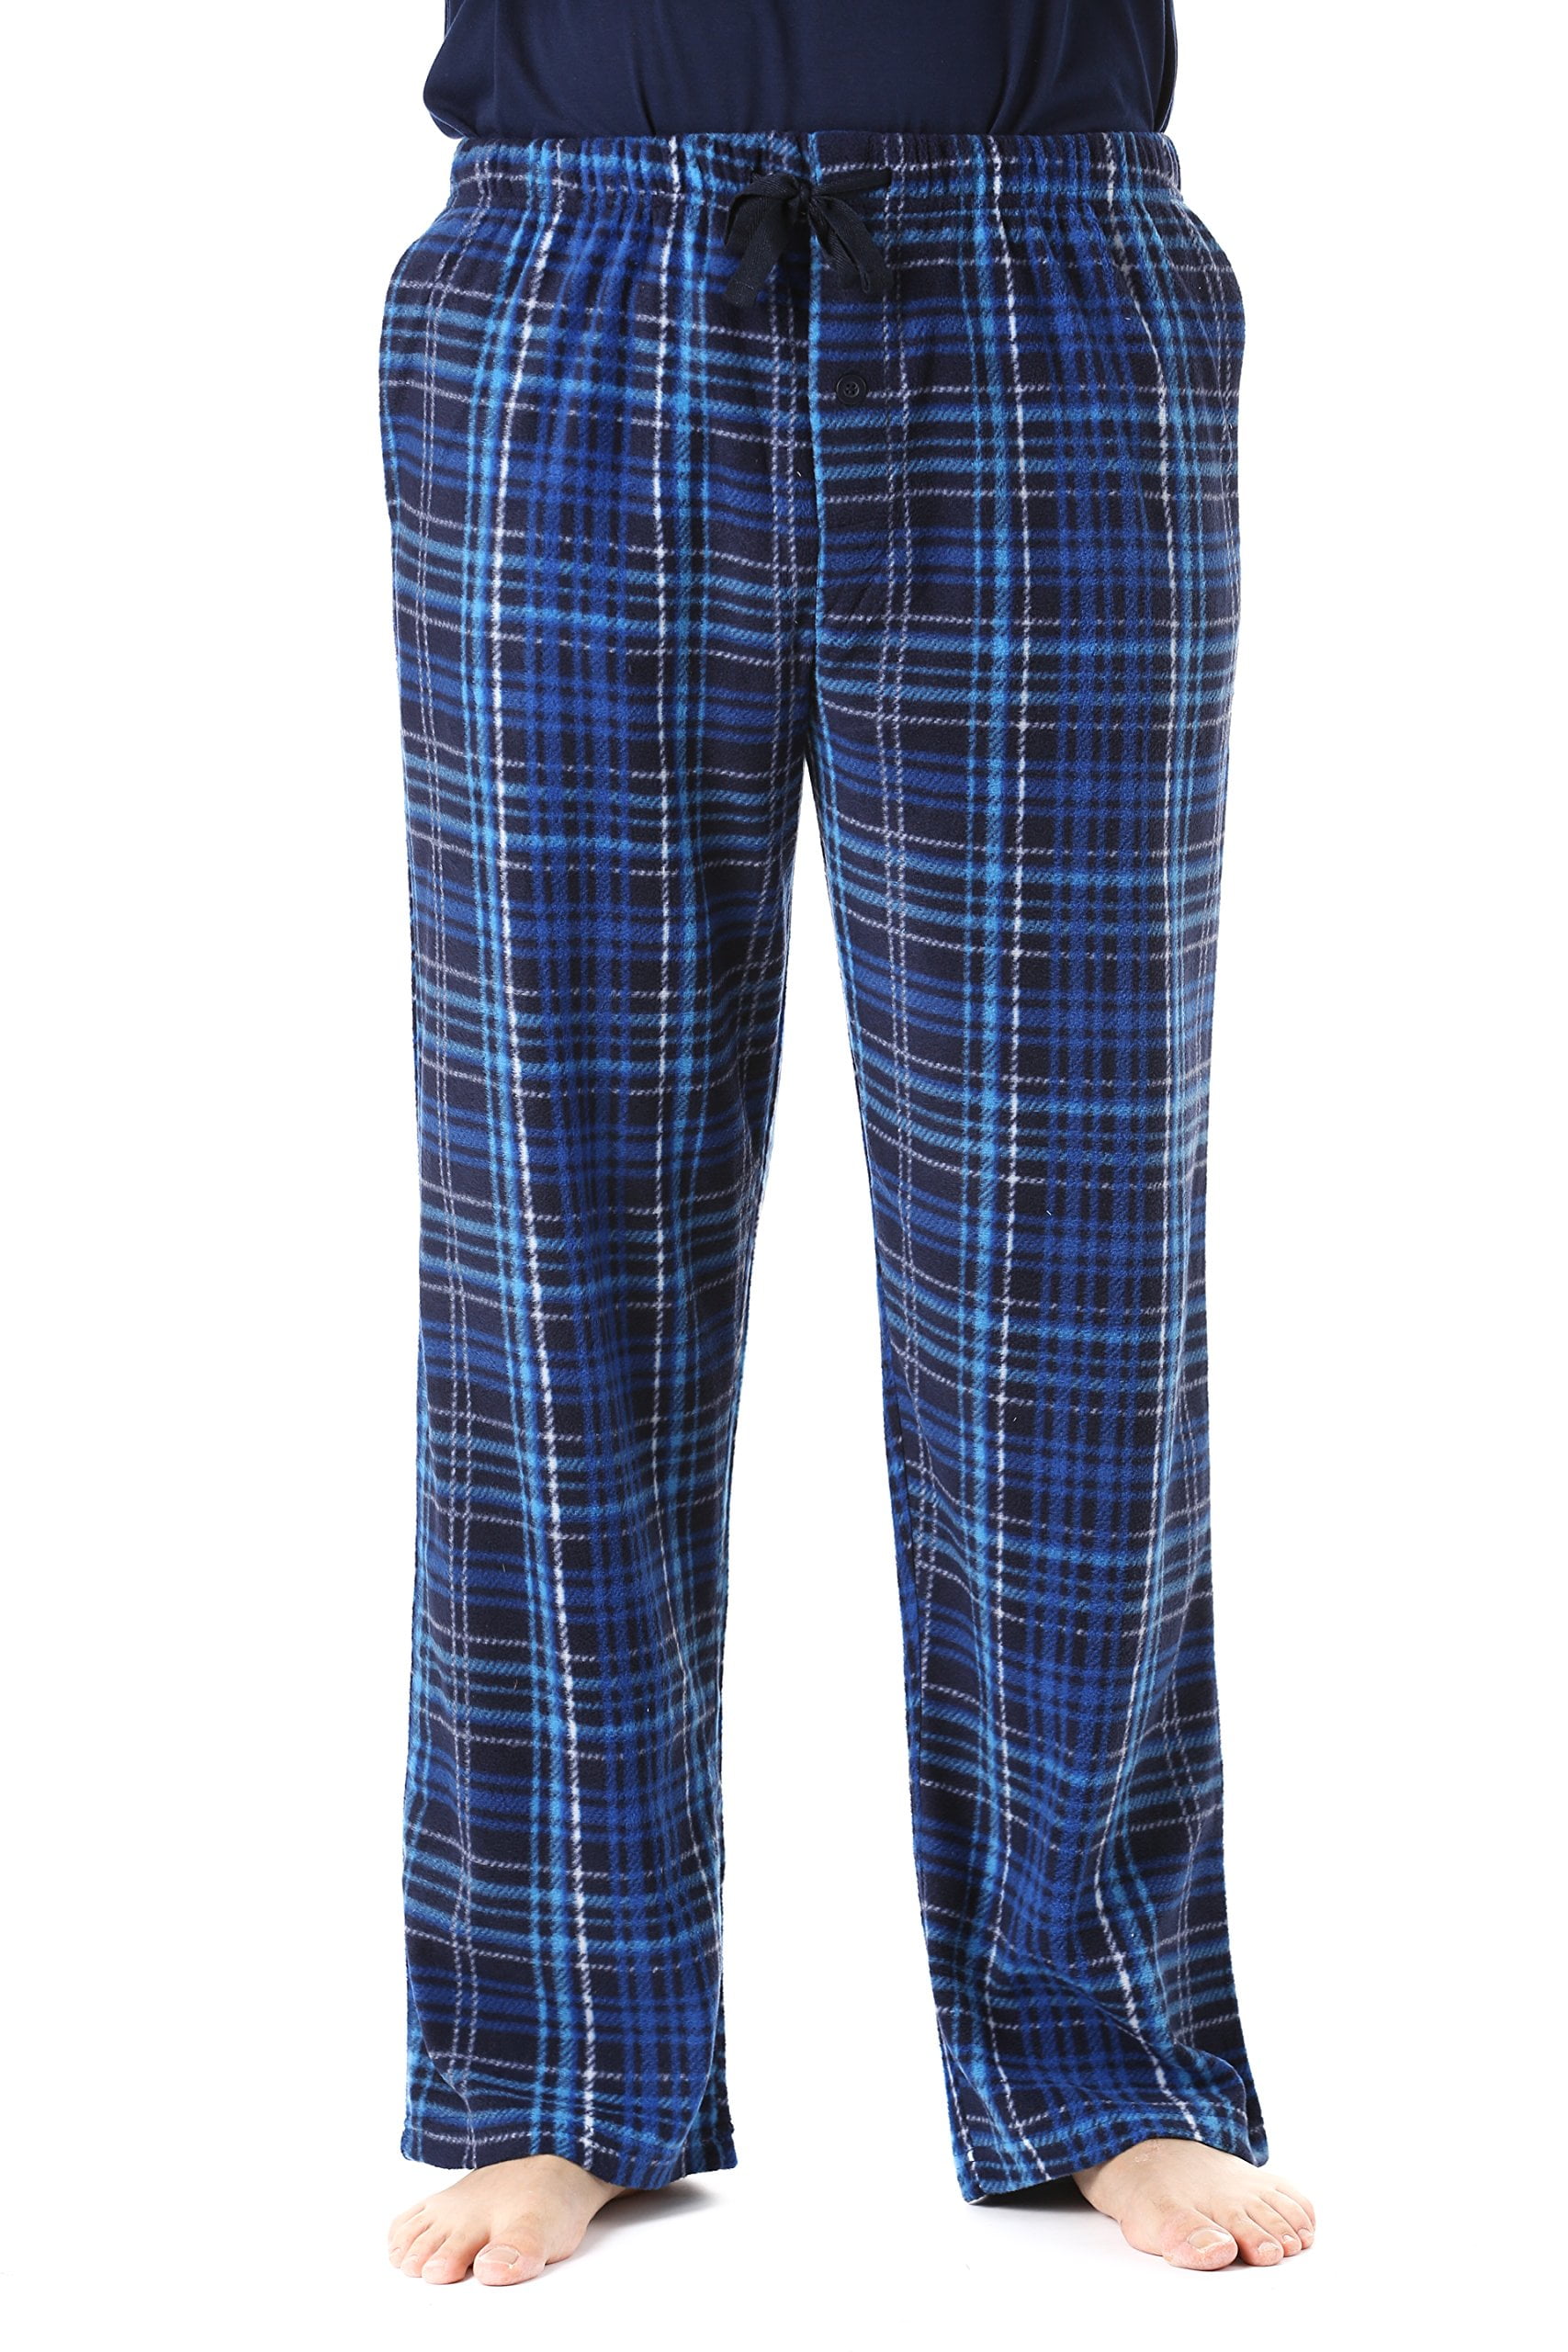 #followme Microfleece Men's Buffalo Plaid Pajama Pants with Pockets (Blue  Plaid, Medium) 